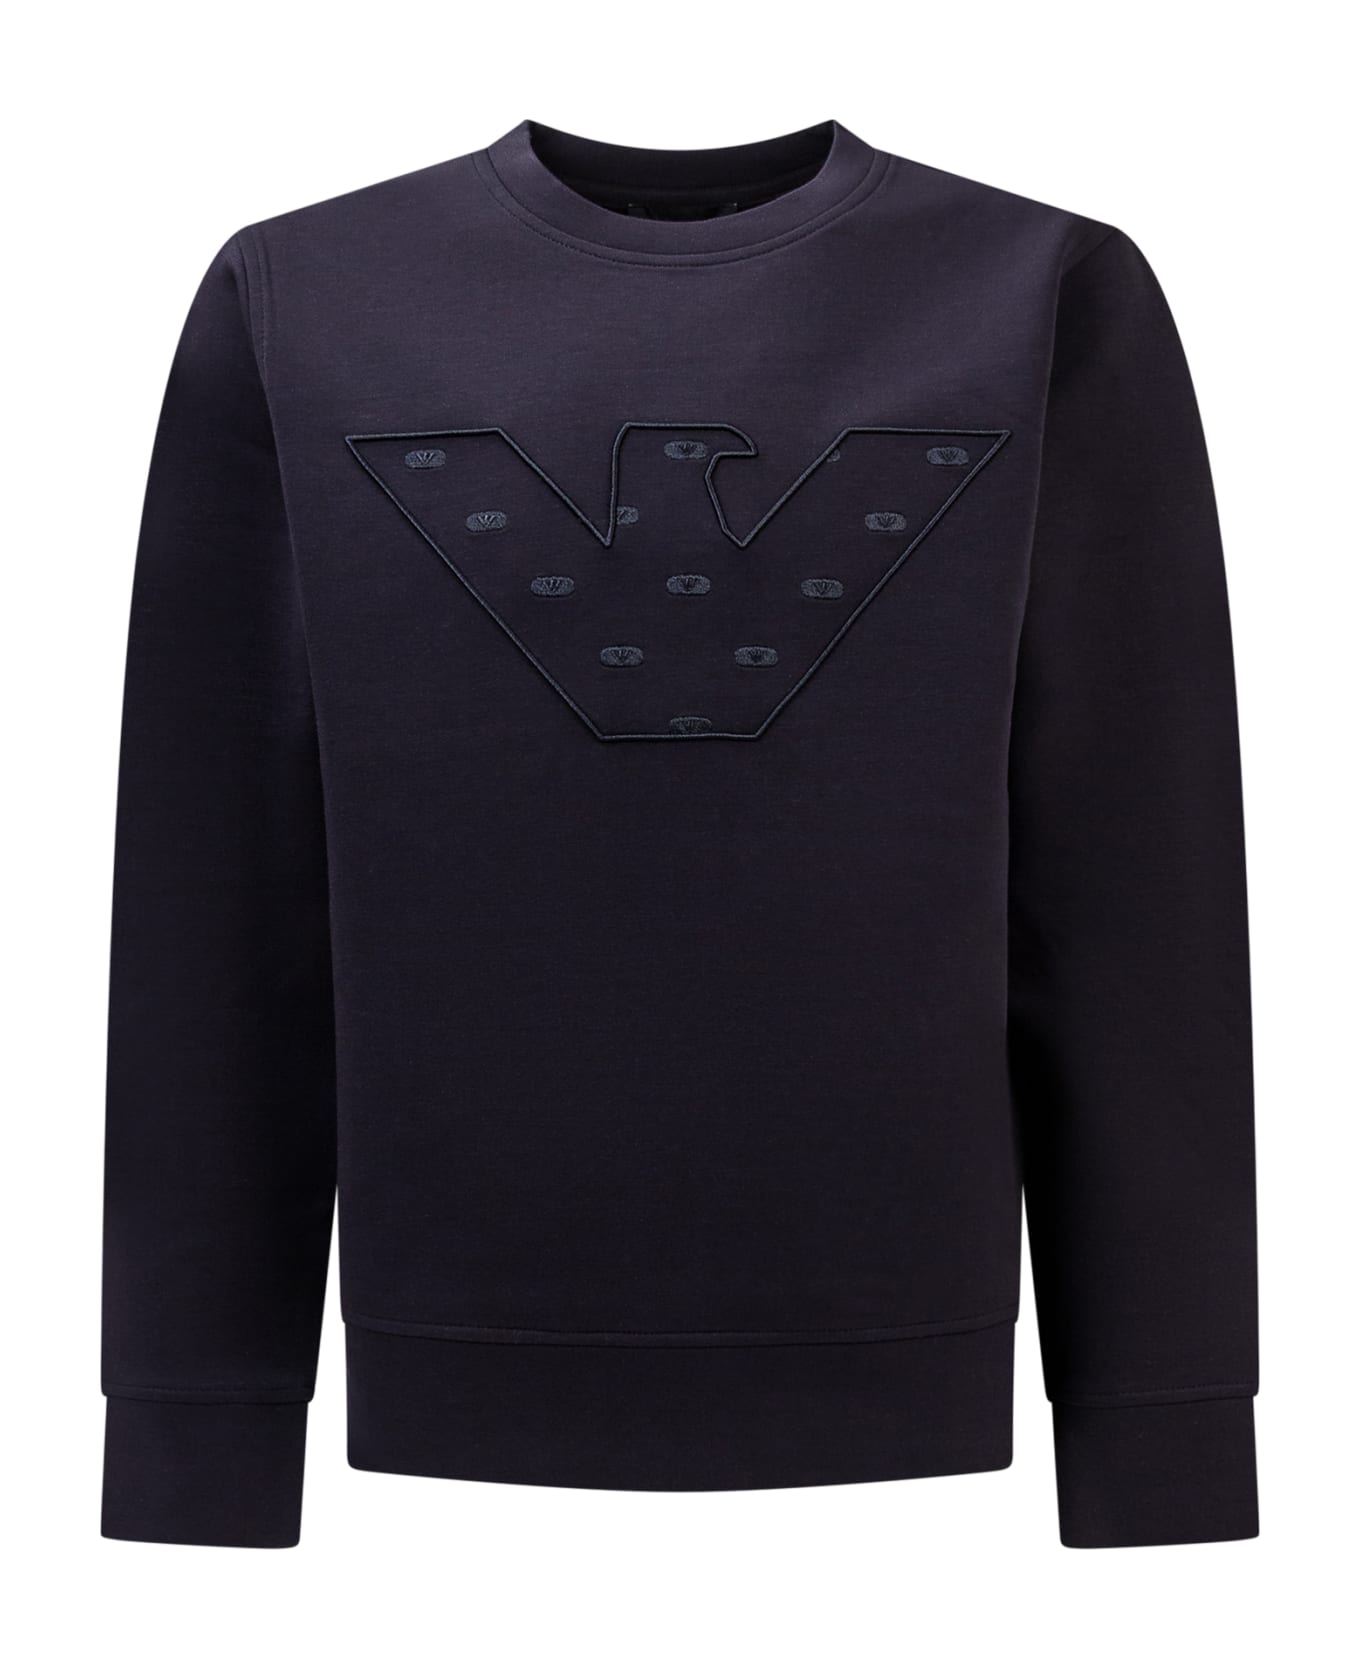 Emporio Armani Sweatshirt With Logo - BLU NAVY